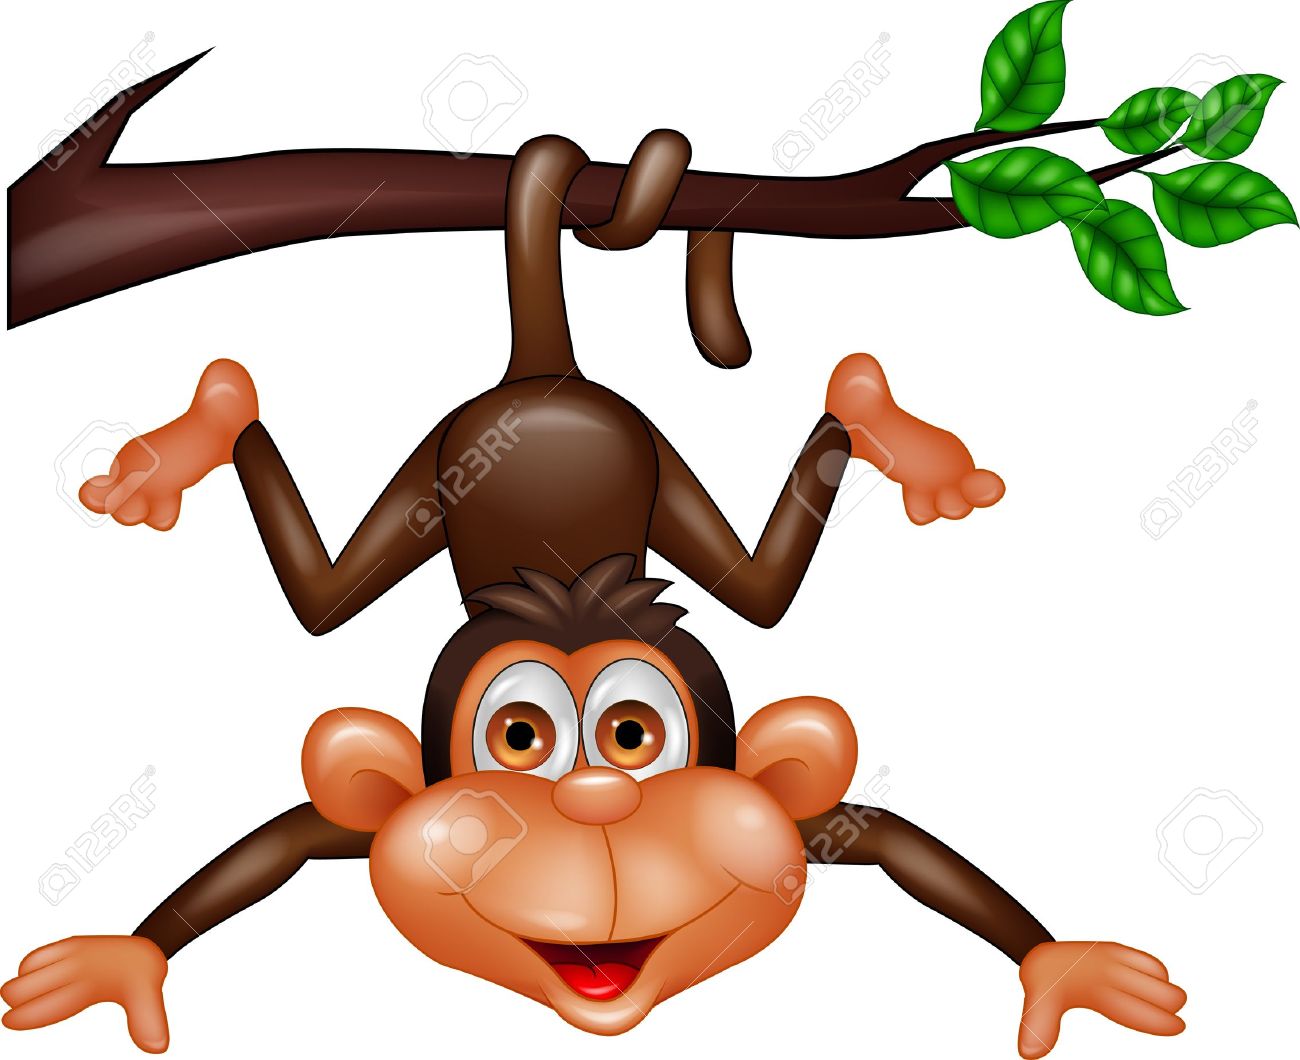 16496625-monkey-hanging-on-tree-branch.jpg